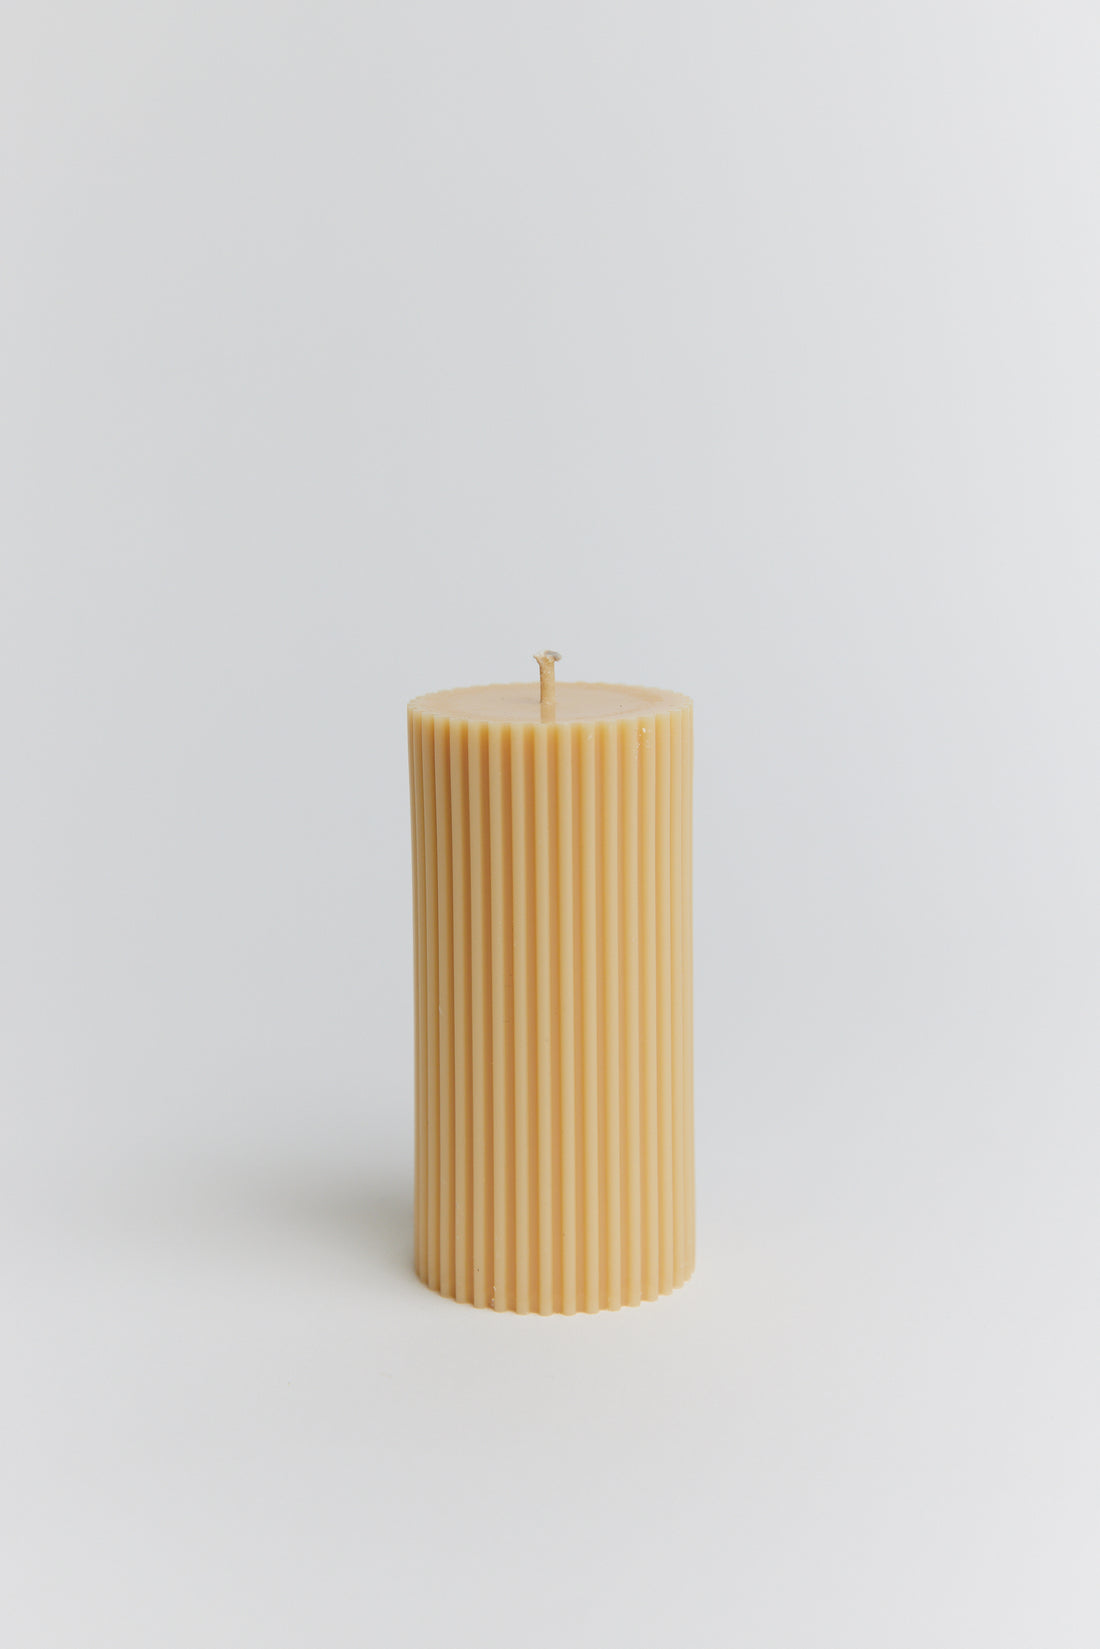 Isla Ribbed Pillar Candle - short